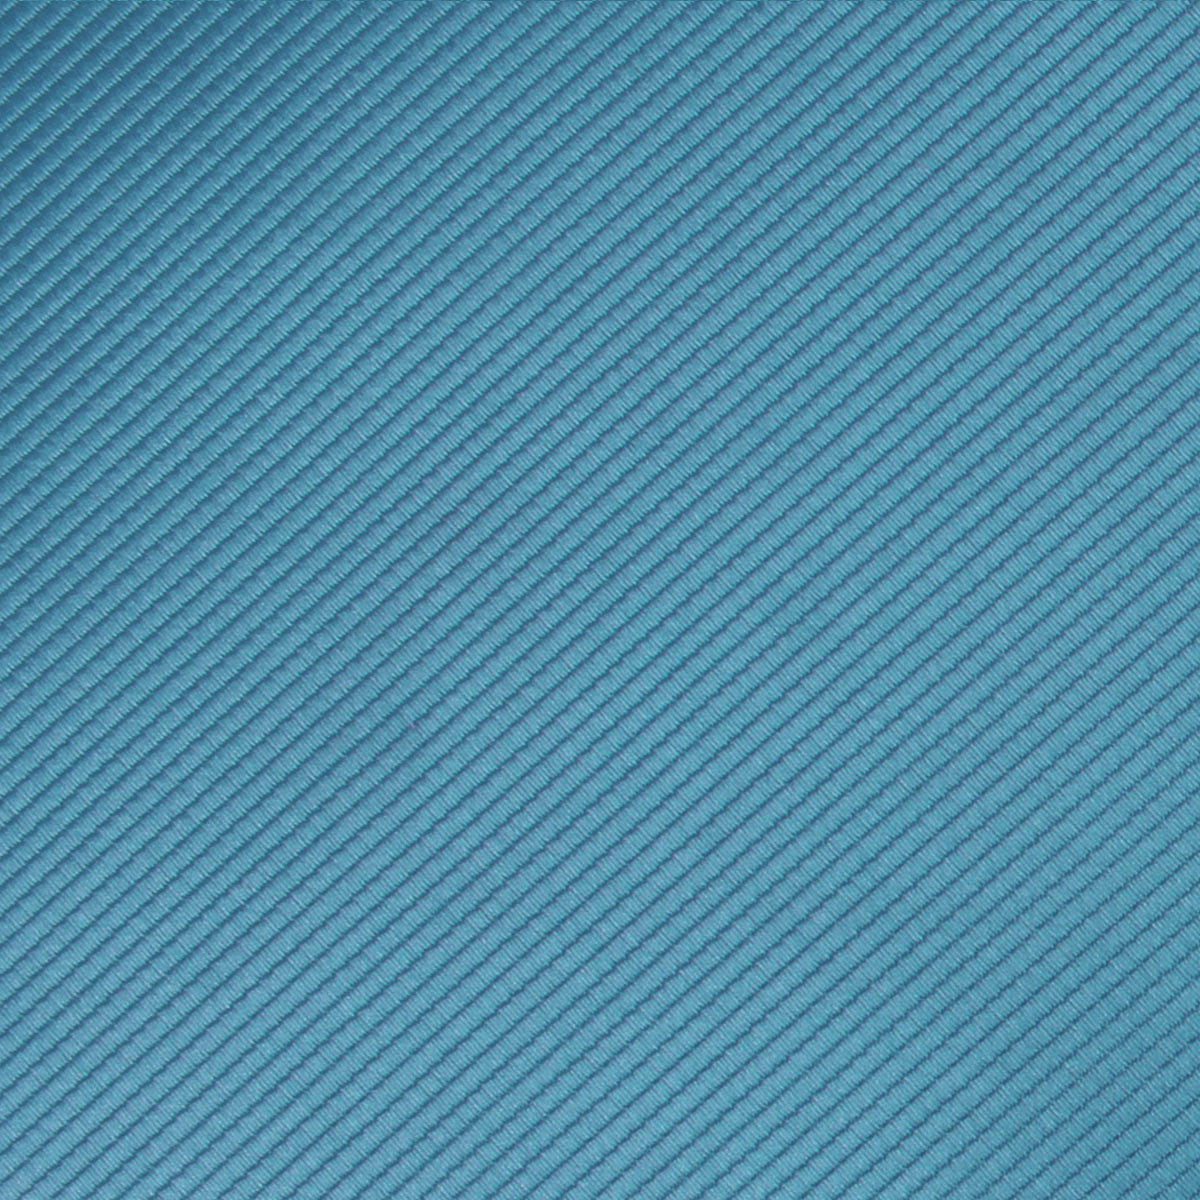 Coastal Blue Twill Pocket Square Fabric